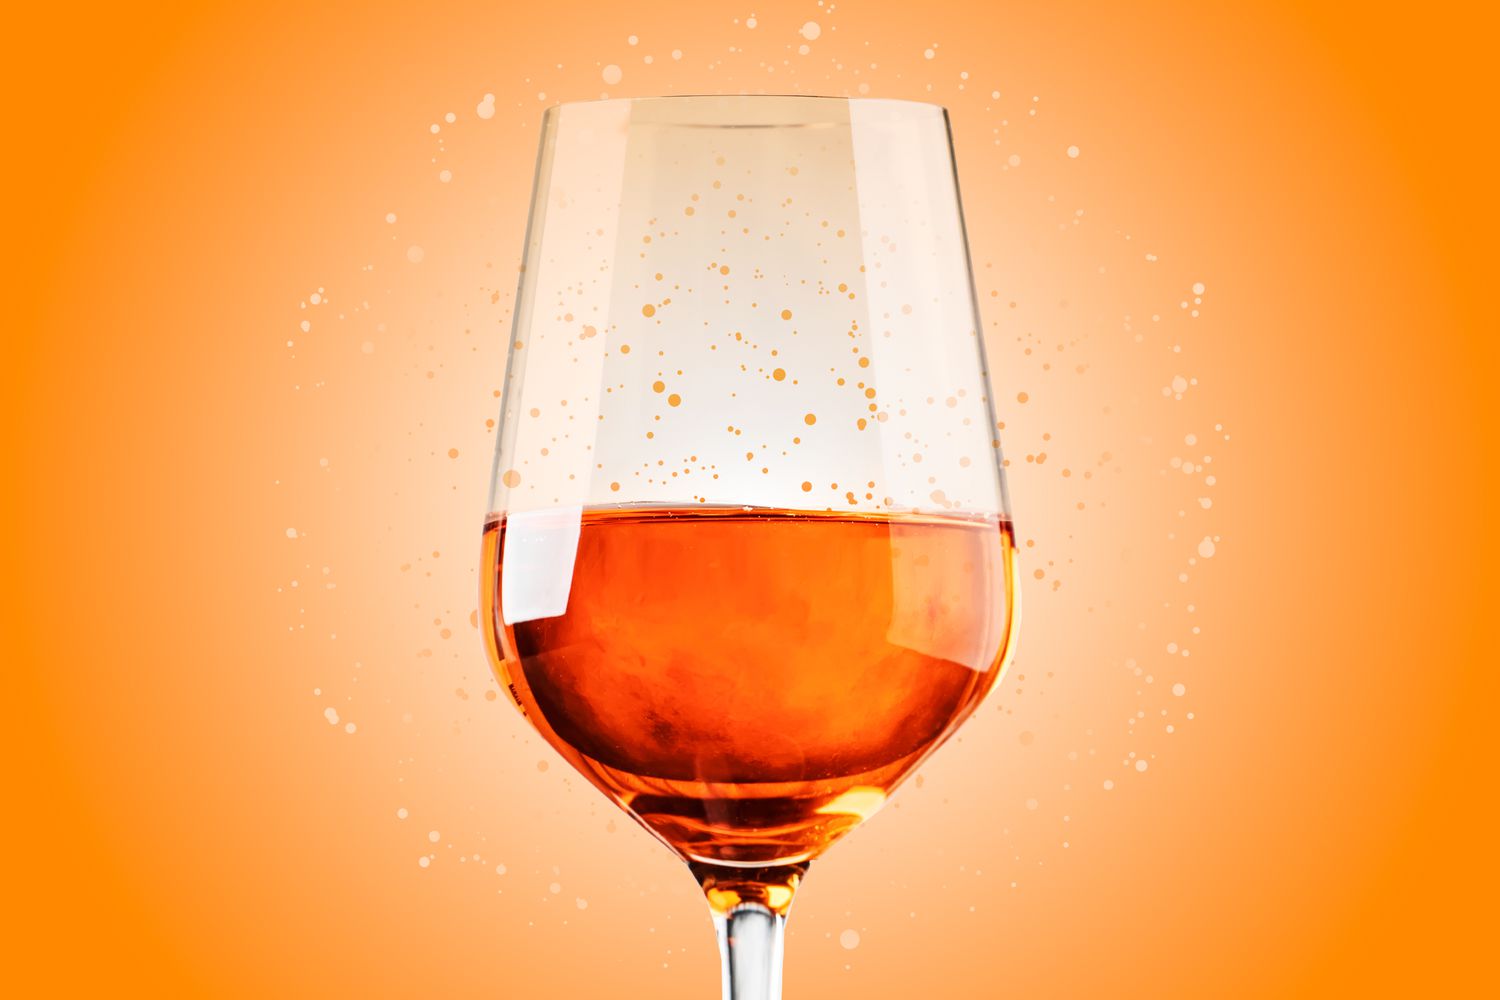 Aa glass of orange wine on a designed background